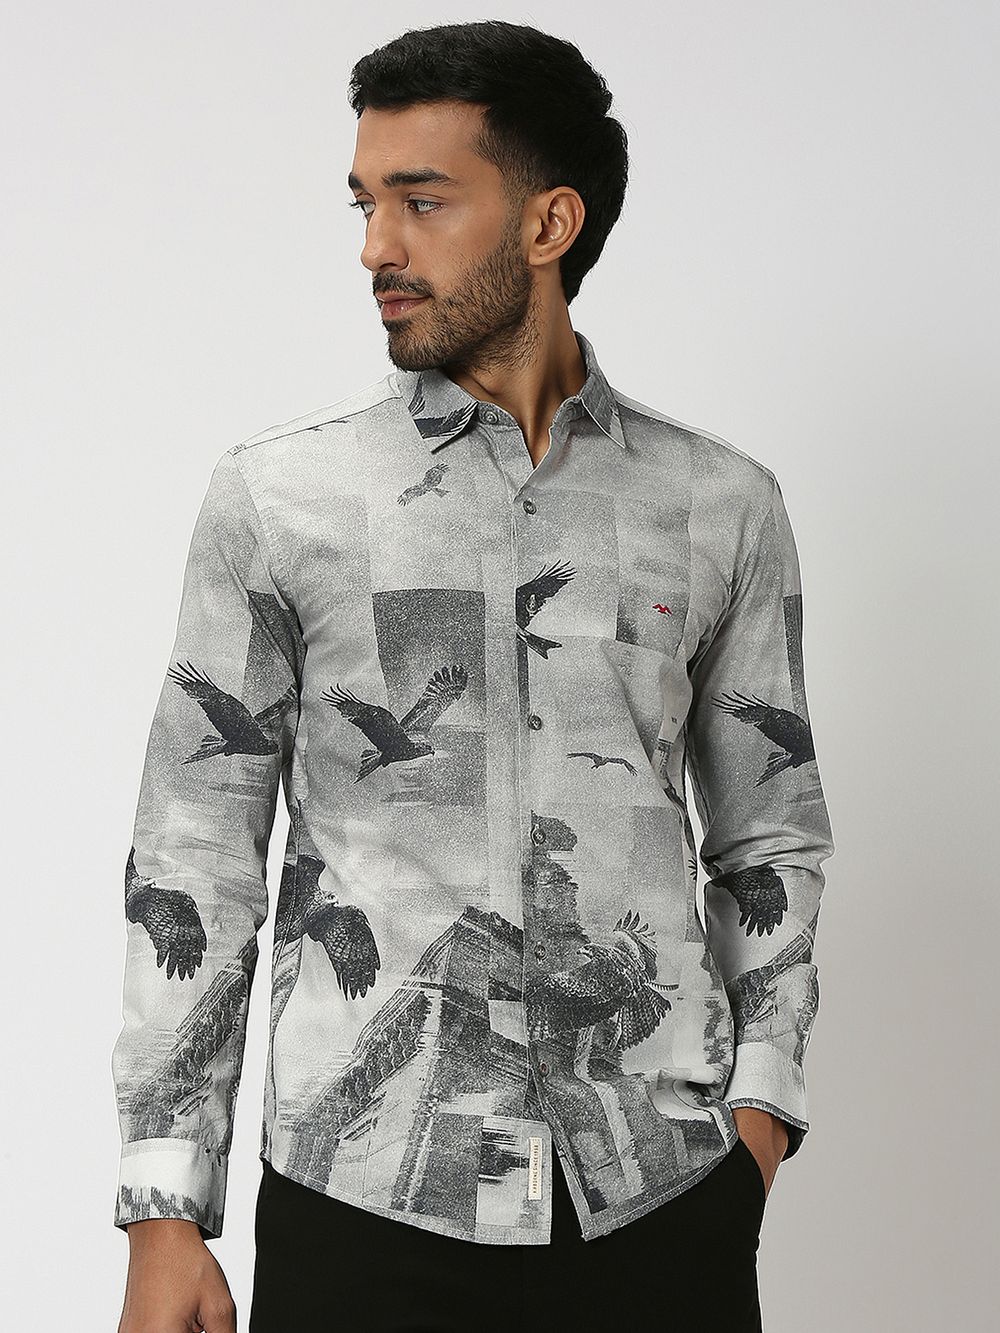 Grey Digital Print Shirt